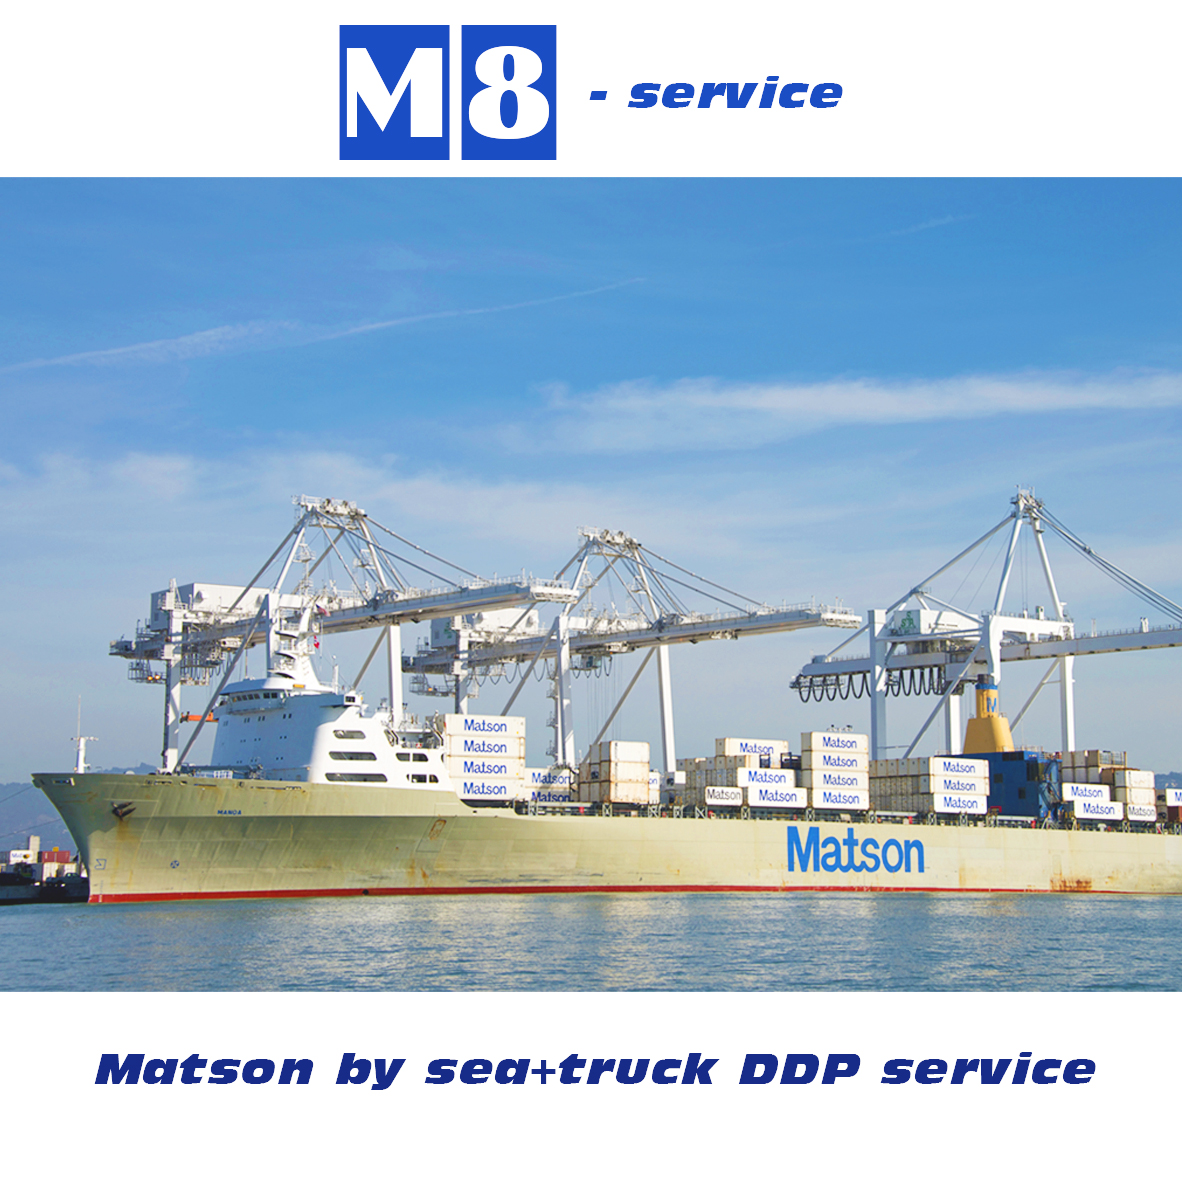 Matson M8 by sea+truck DDP service